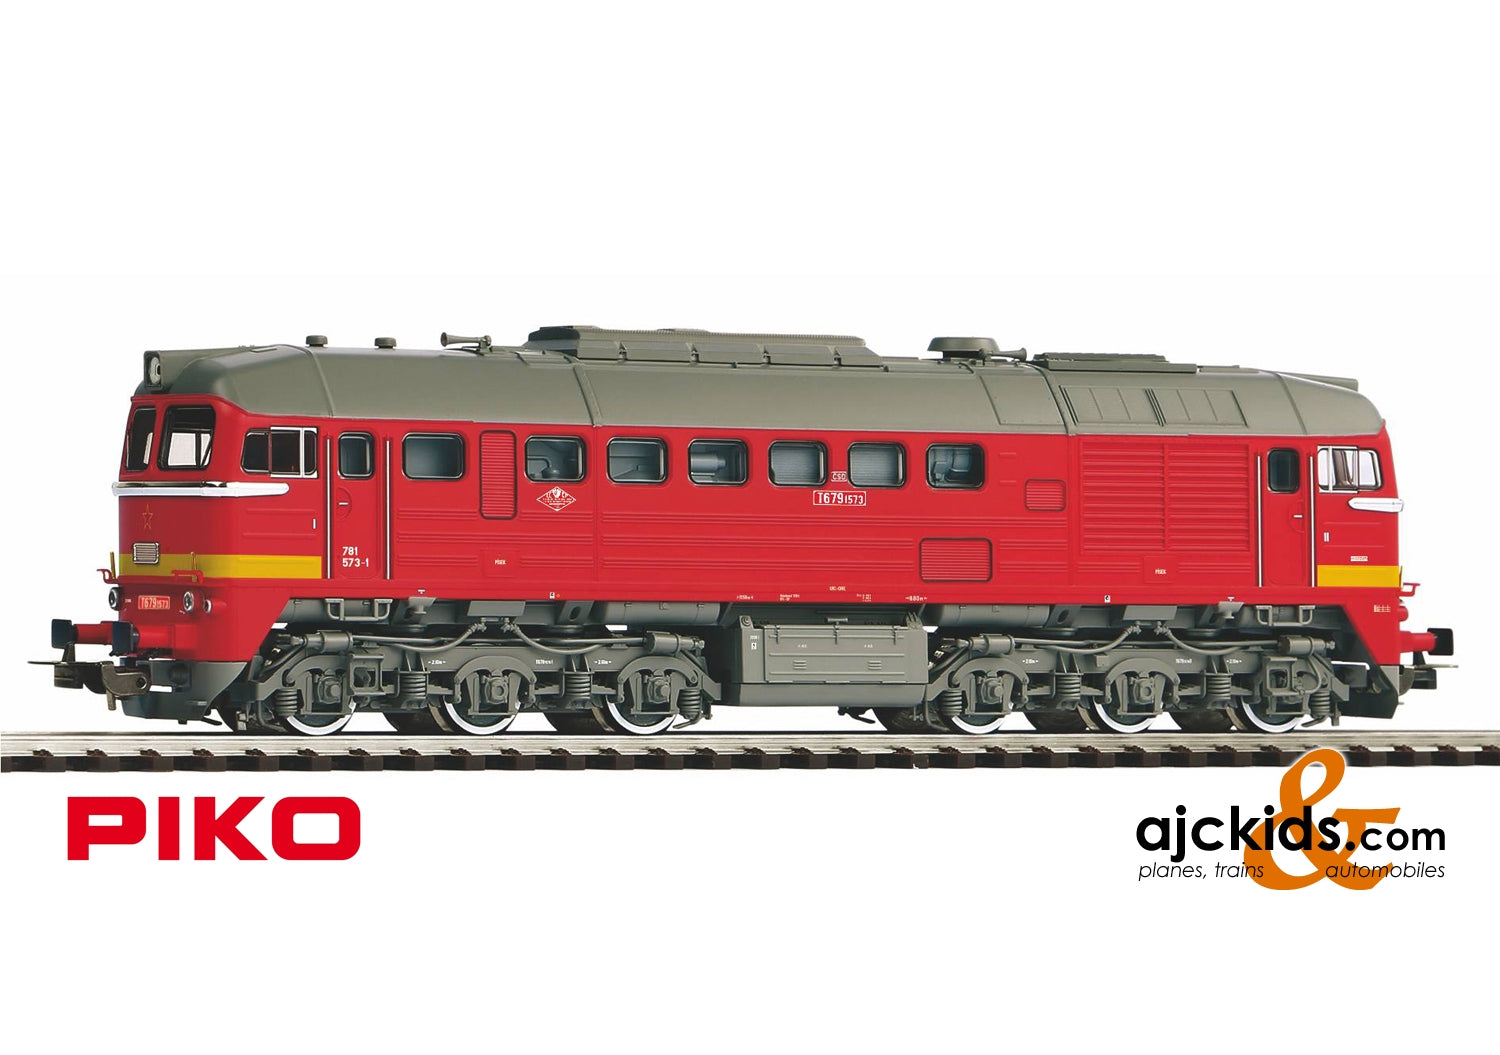 Piko 52814 - T679.1 Diesel Locomotive CSD IV